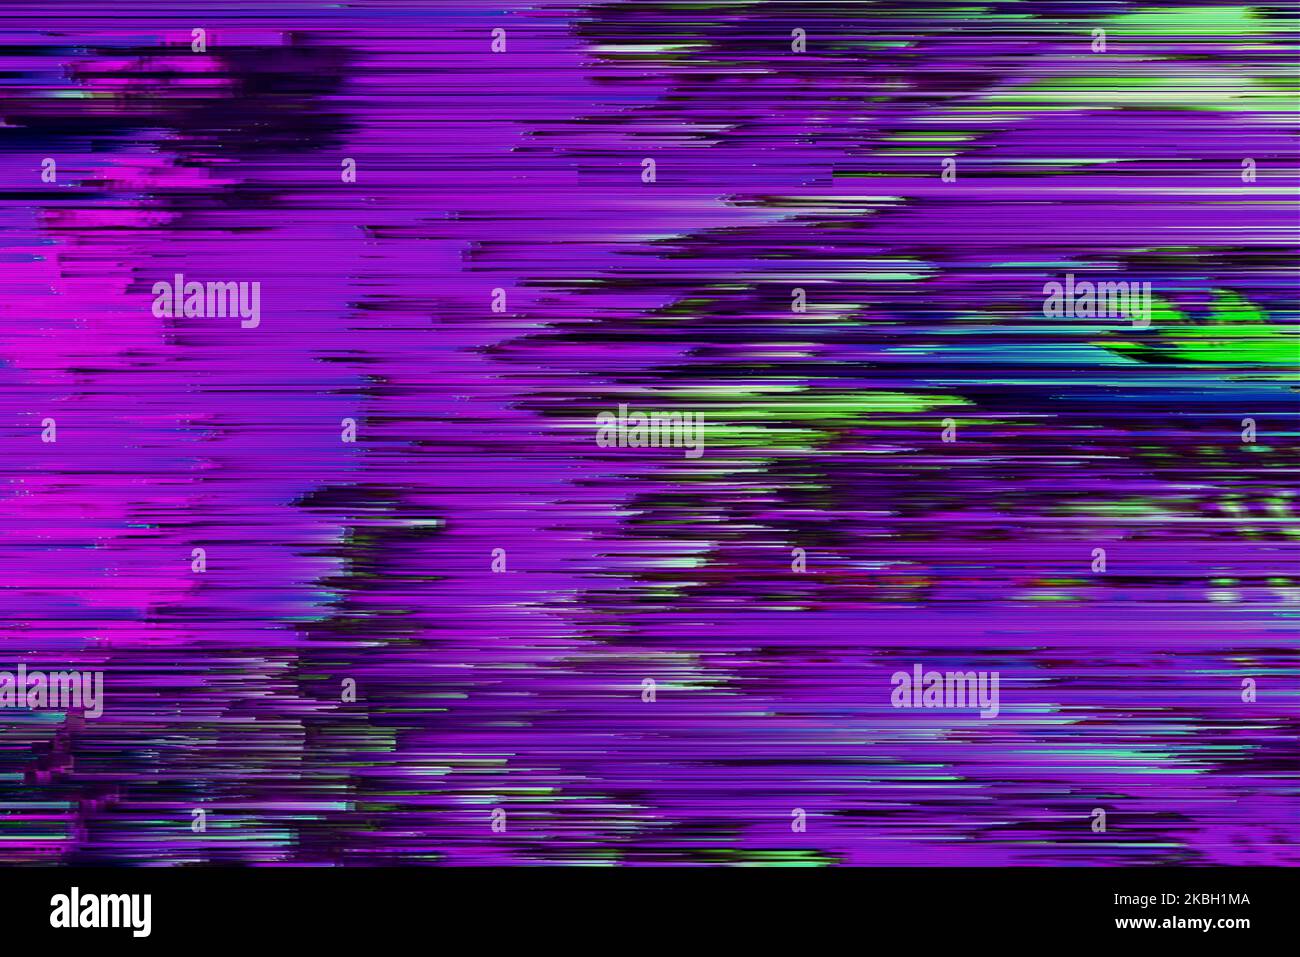 Abstract purple pink green psychedelic zebra background interlaced digital Distorted Motion glitch effect. Futuristic striped cyberpunk design Retro w Stock Photo